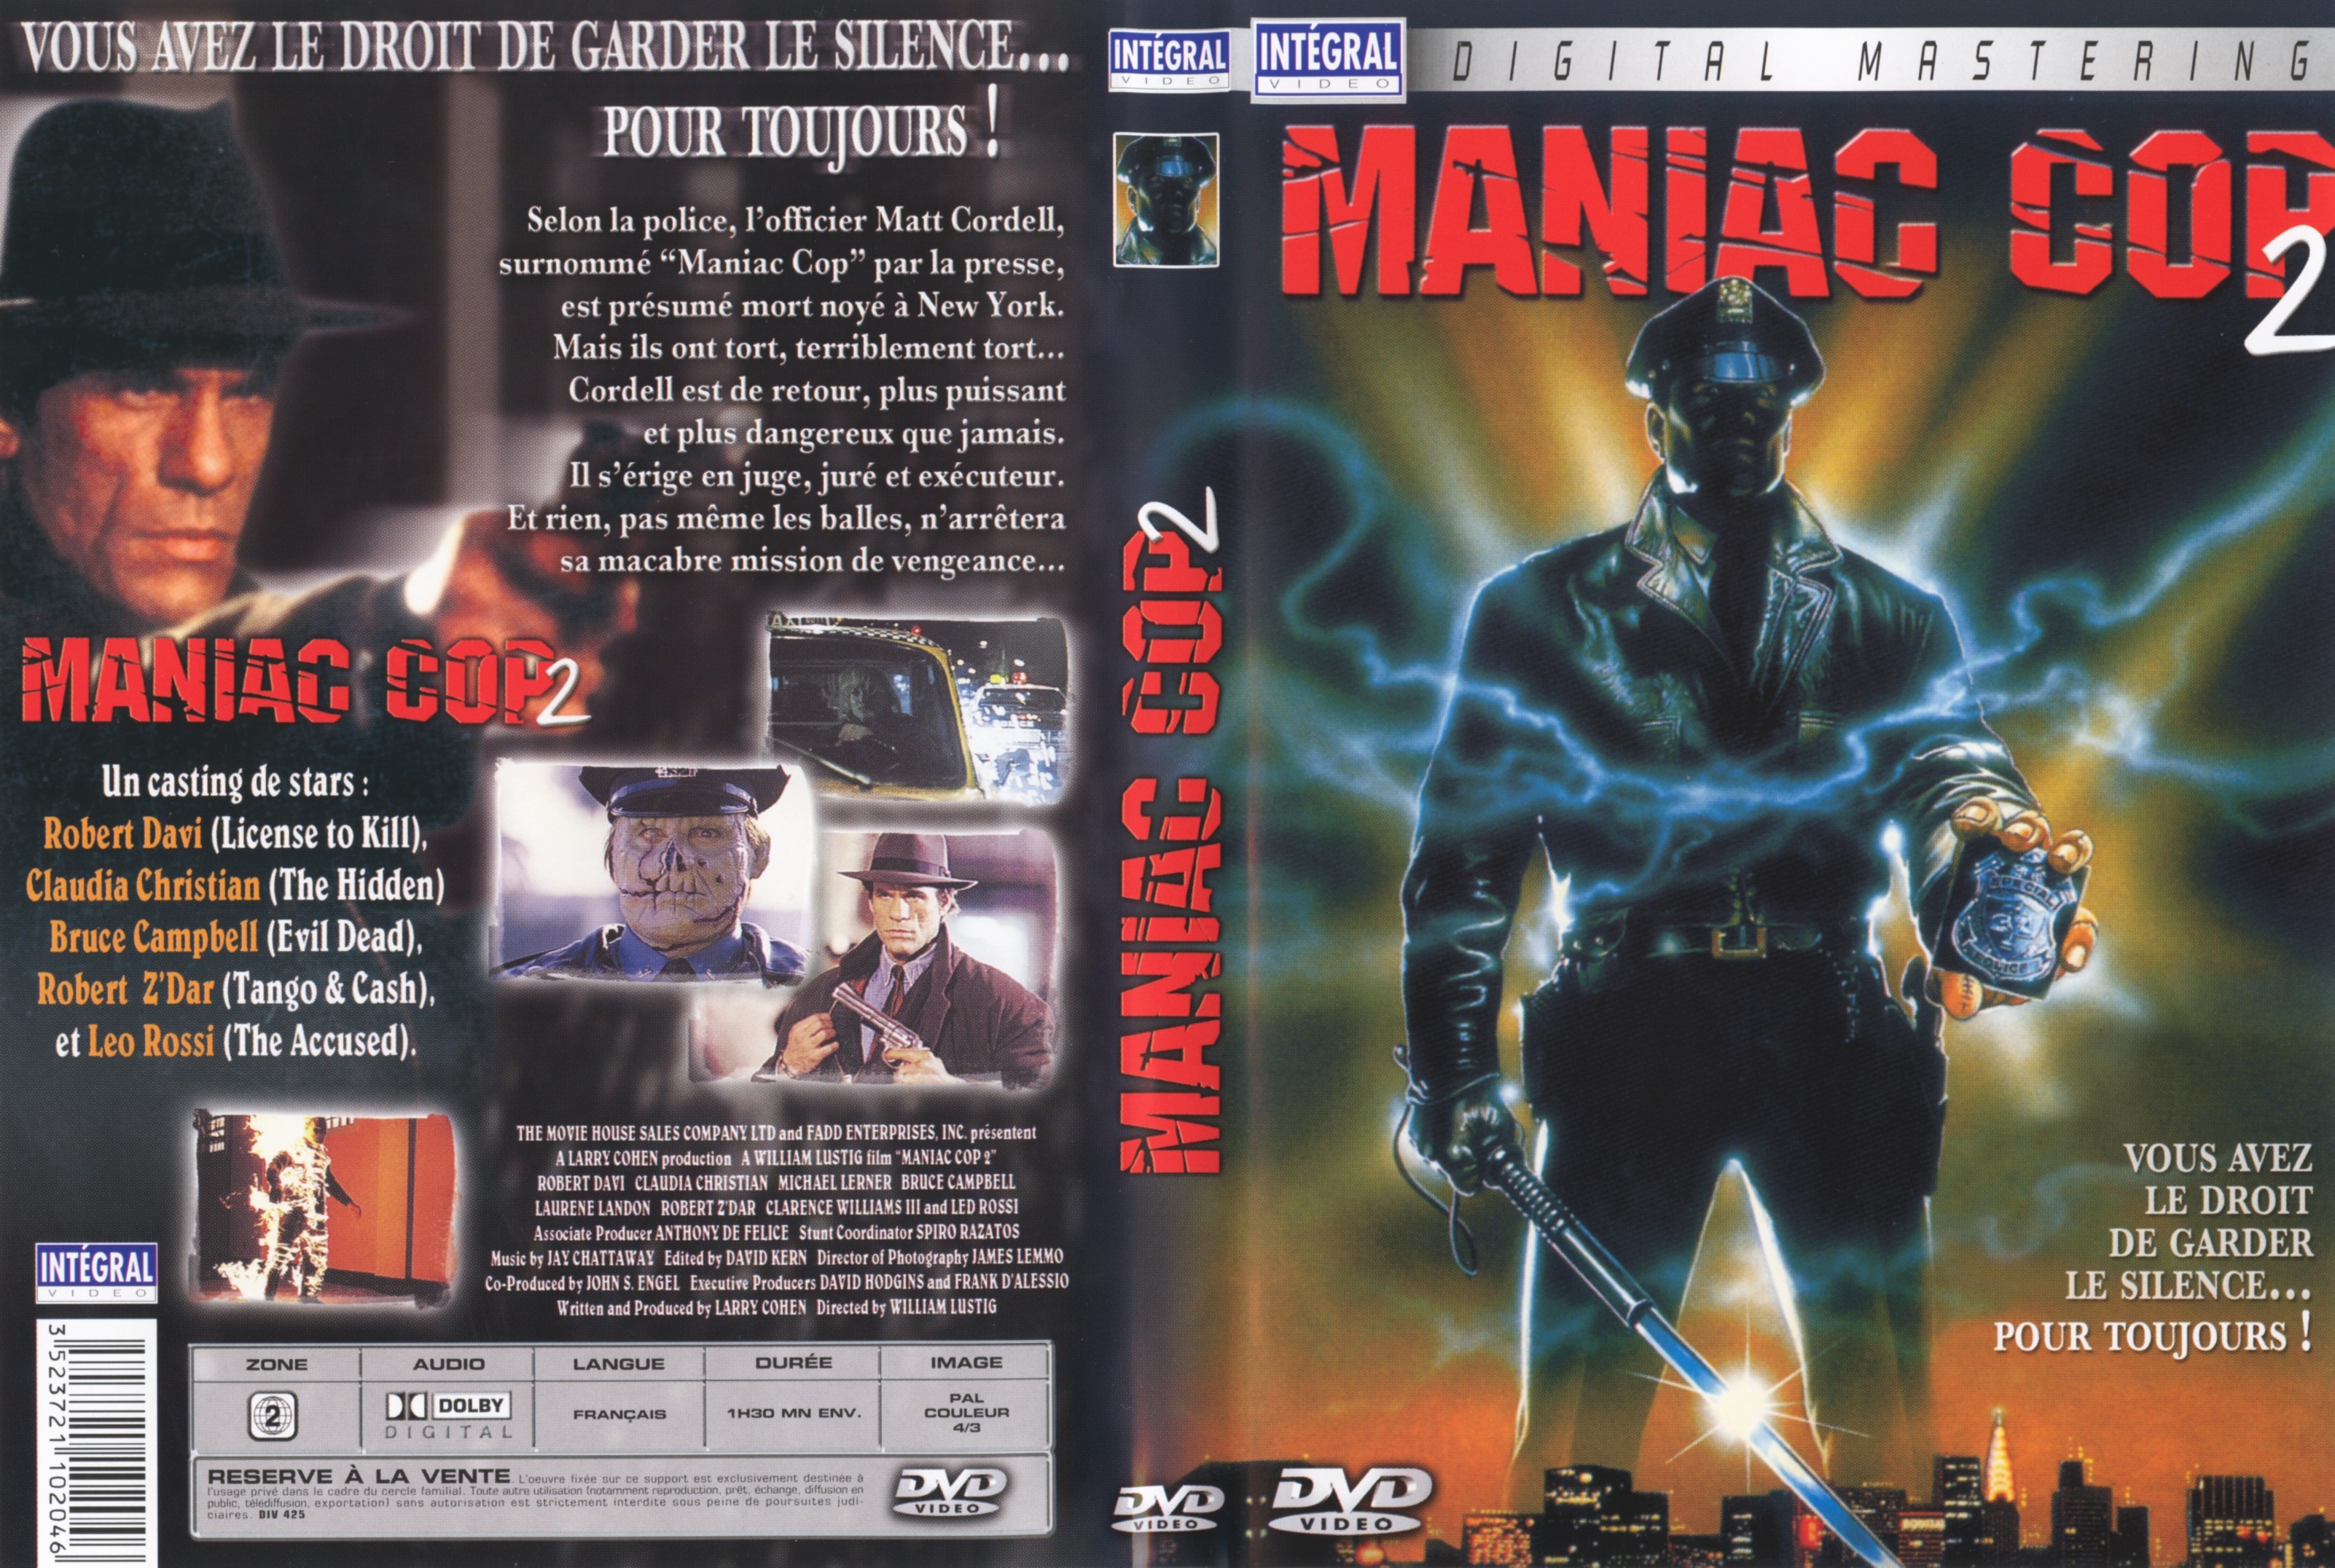 Jaquette DVD Maniac cop 2 v2